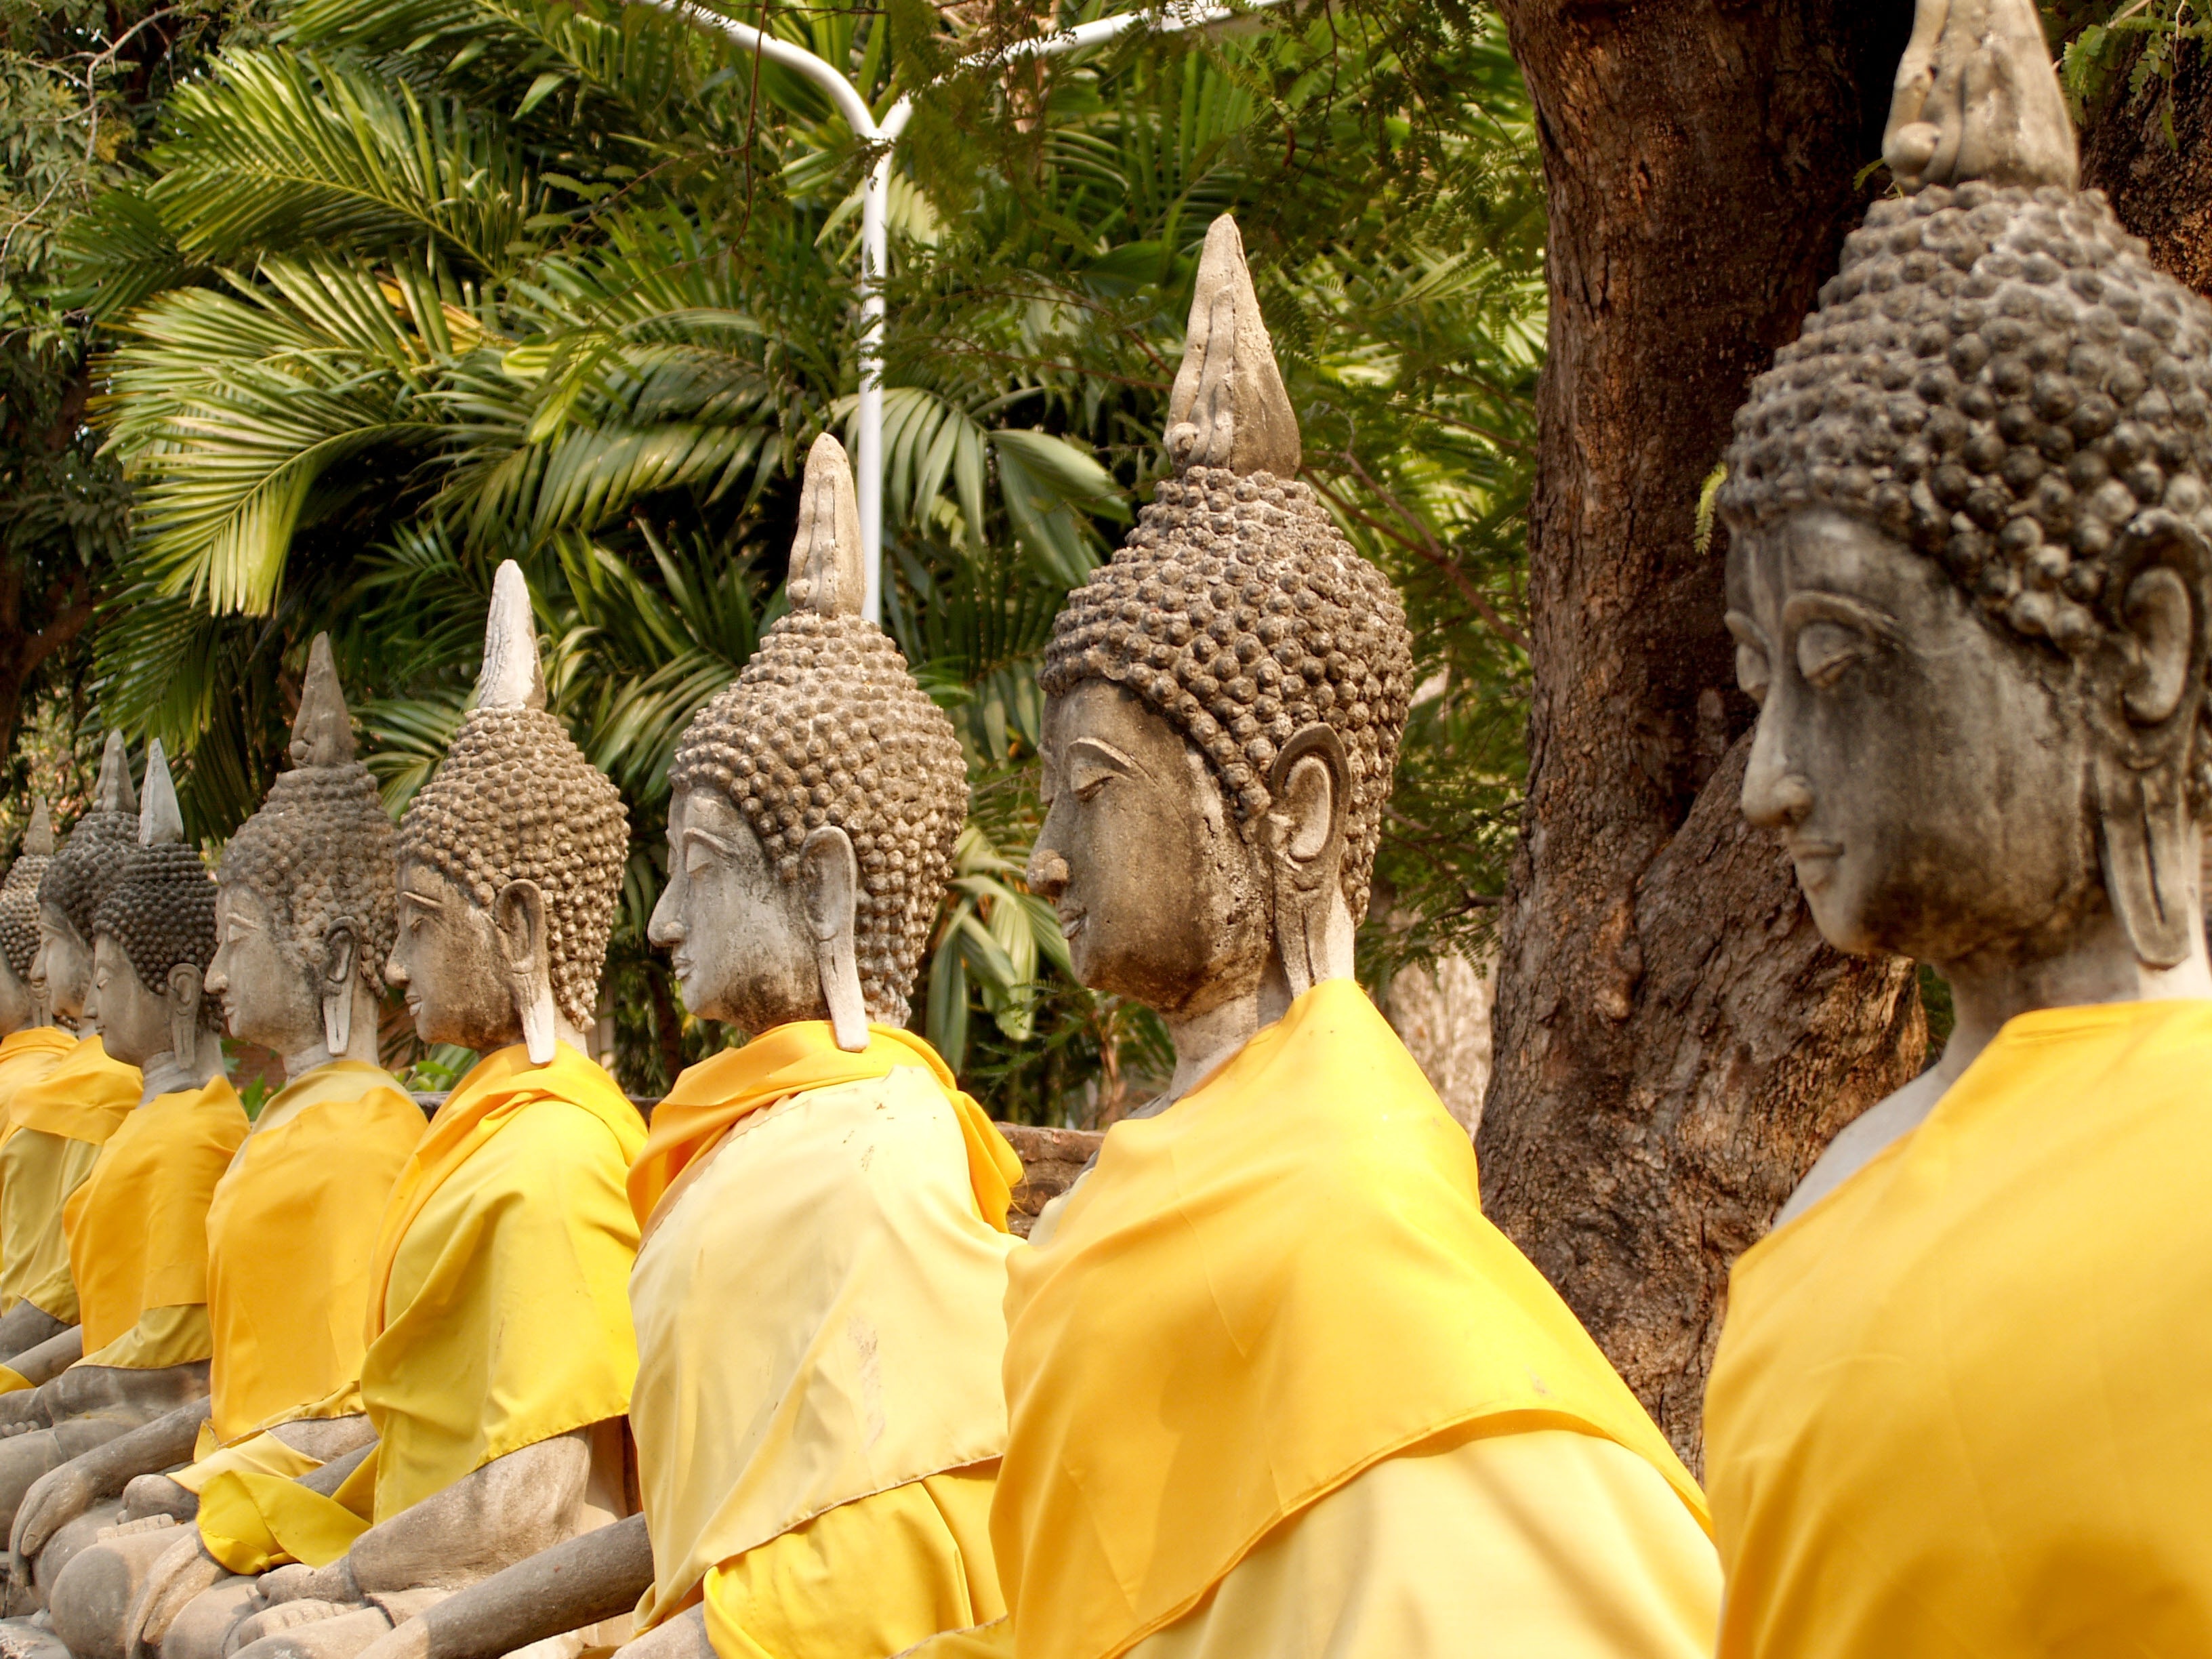 meditating buddha statues